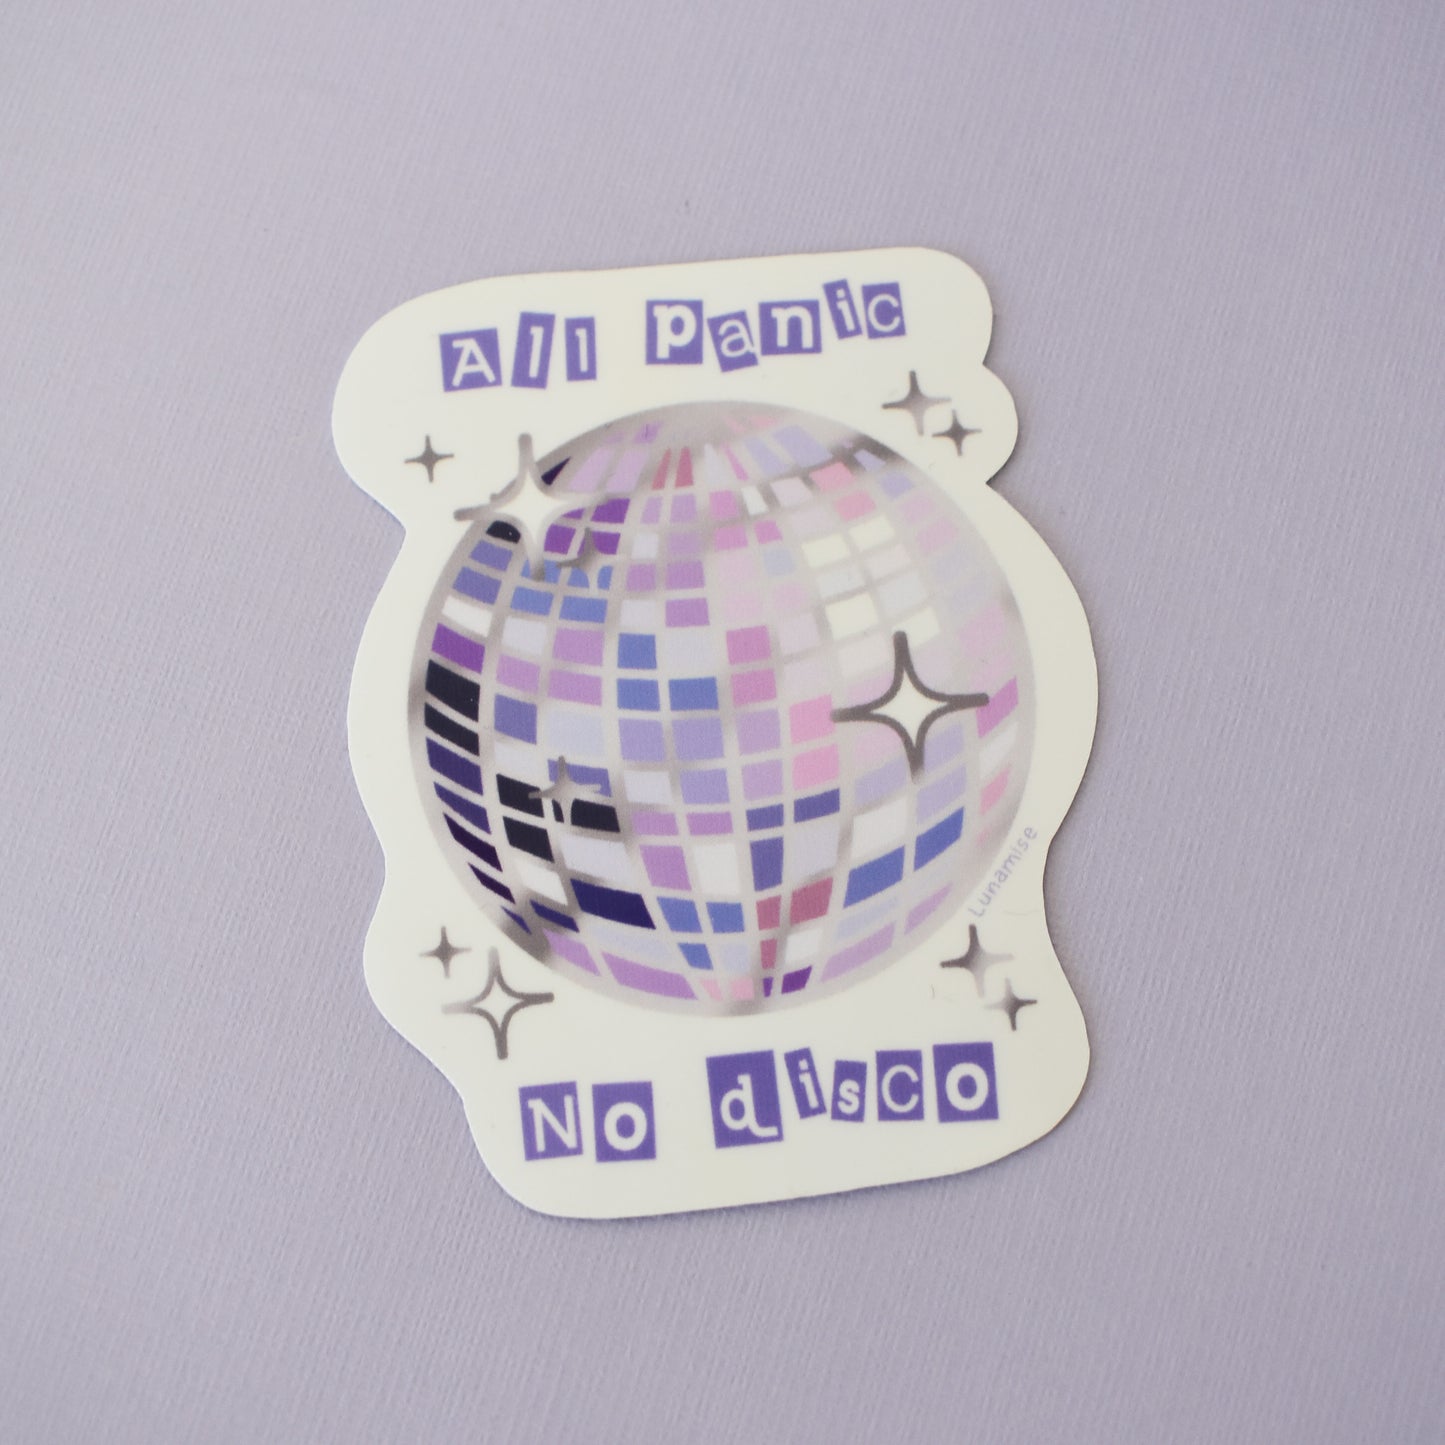 All Panic No Disco Die Cut Sticker